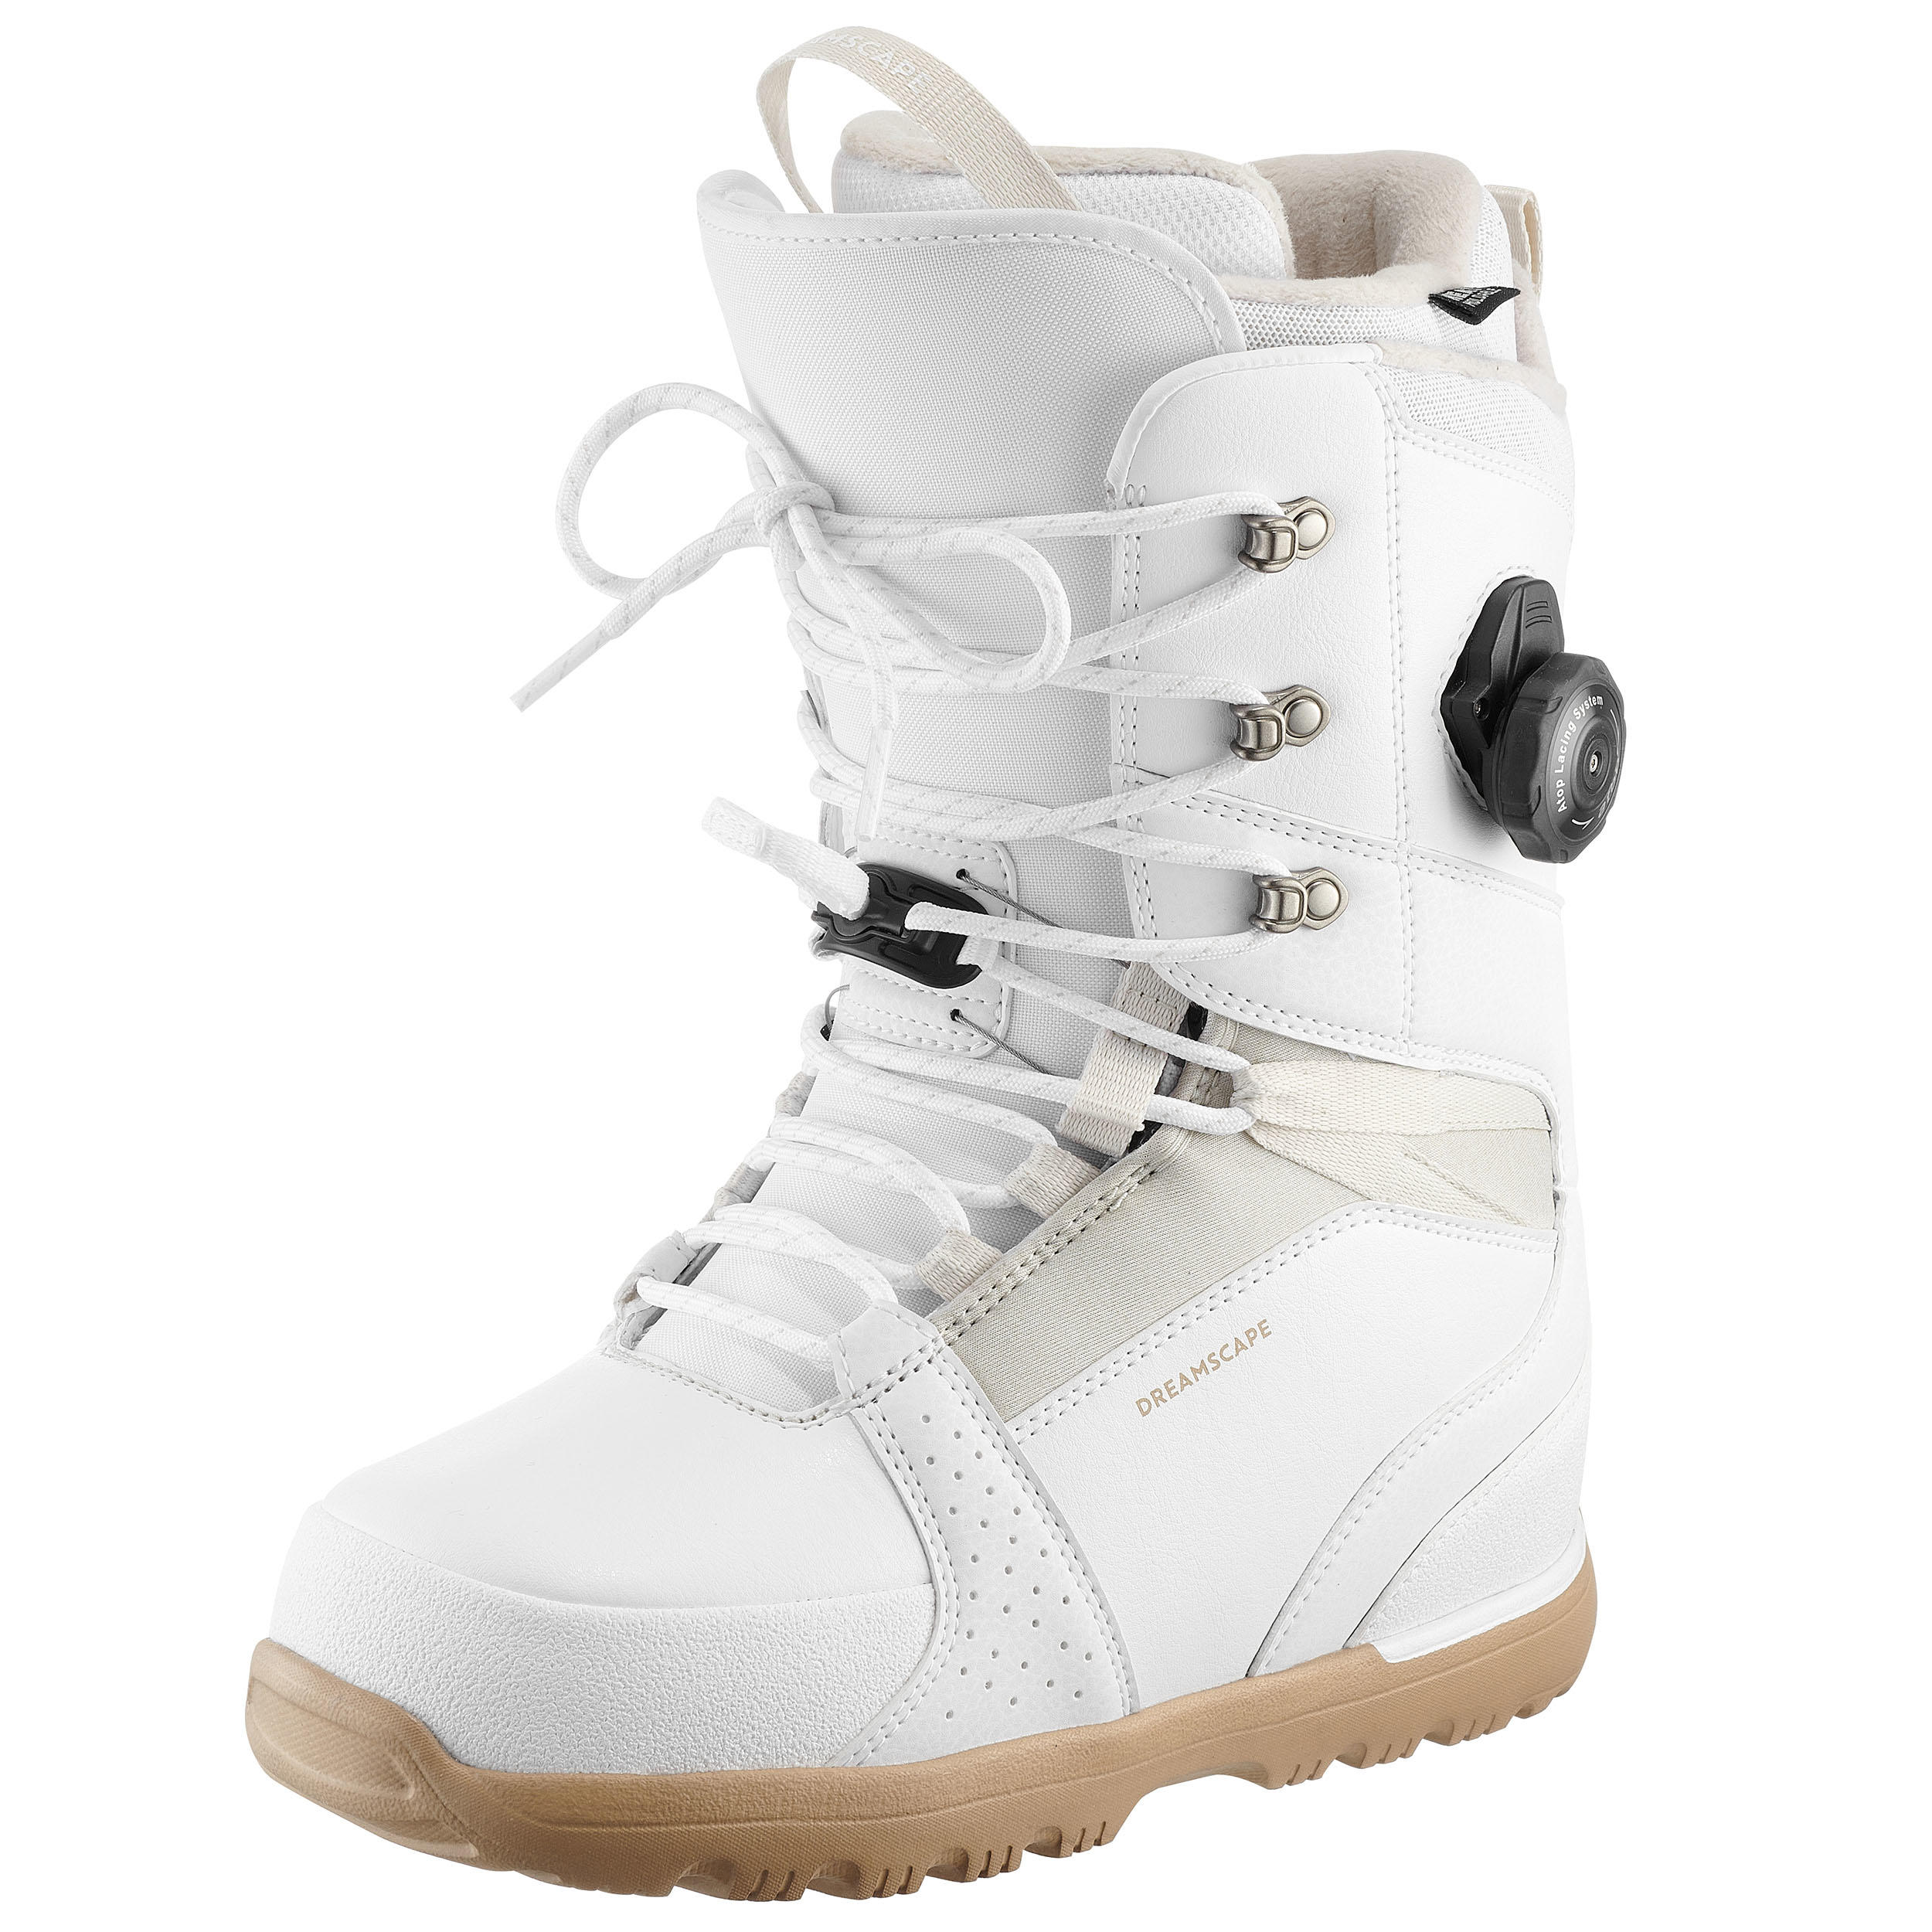 DREAMSCAPE Women's Snowboard Boots FS/AM Endzone, White 